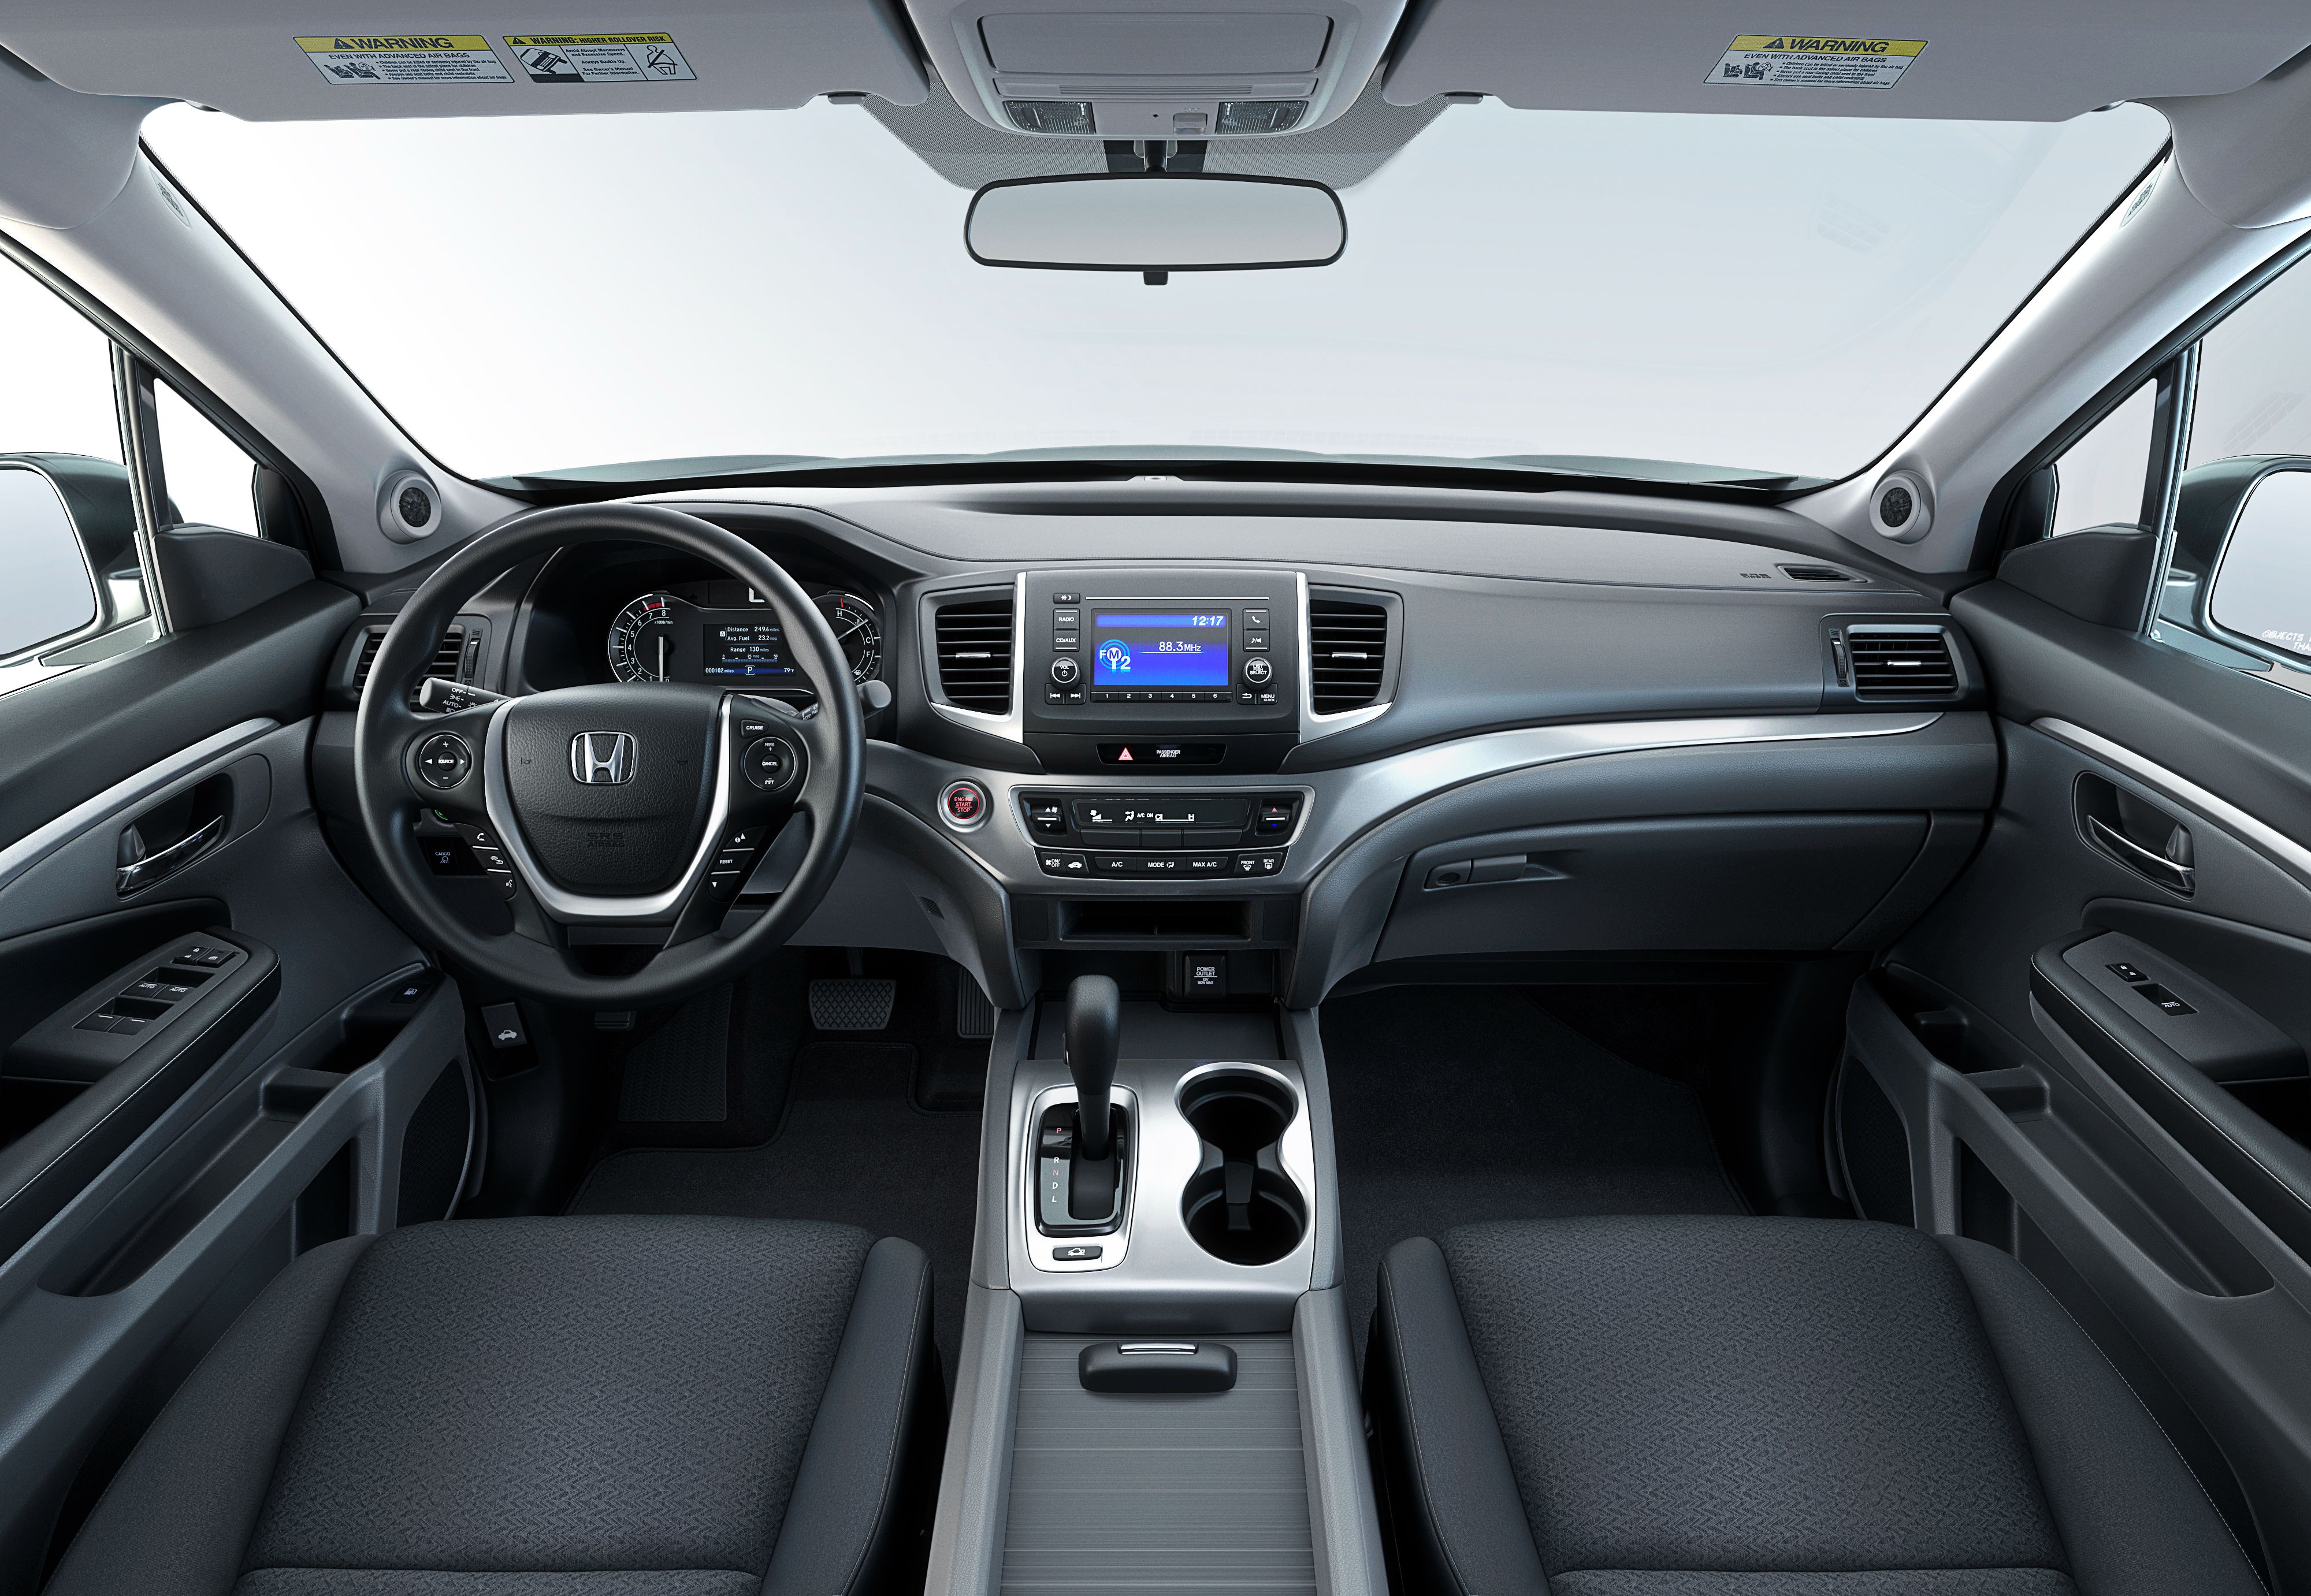 Honda Ridgeline front interior